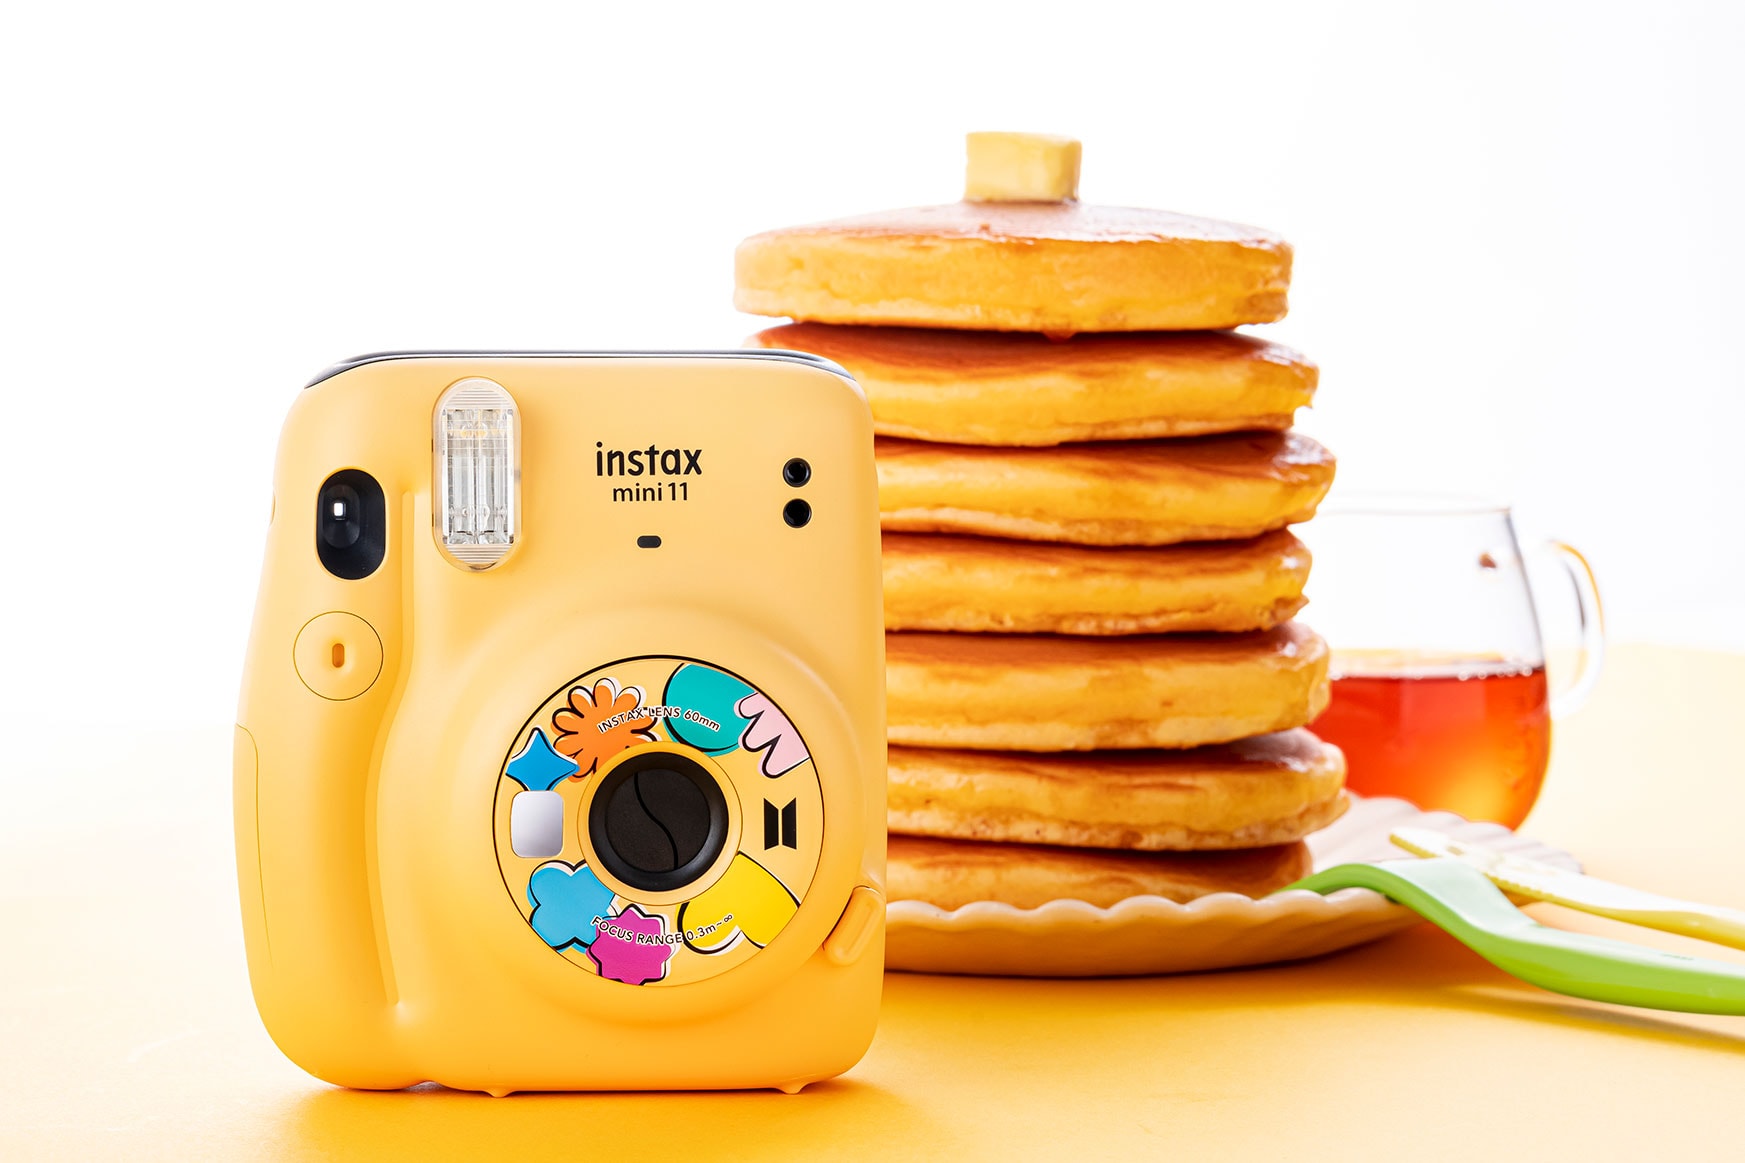 Fujifilm INSTAX Mini 11™ BTS Butter Instant Camera release Kpop music film cameras design color 